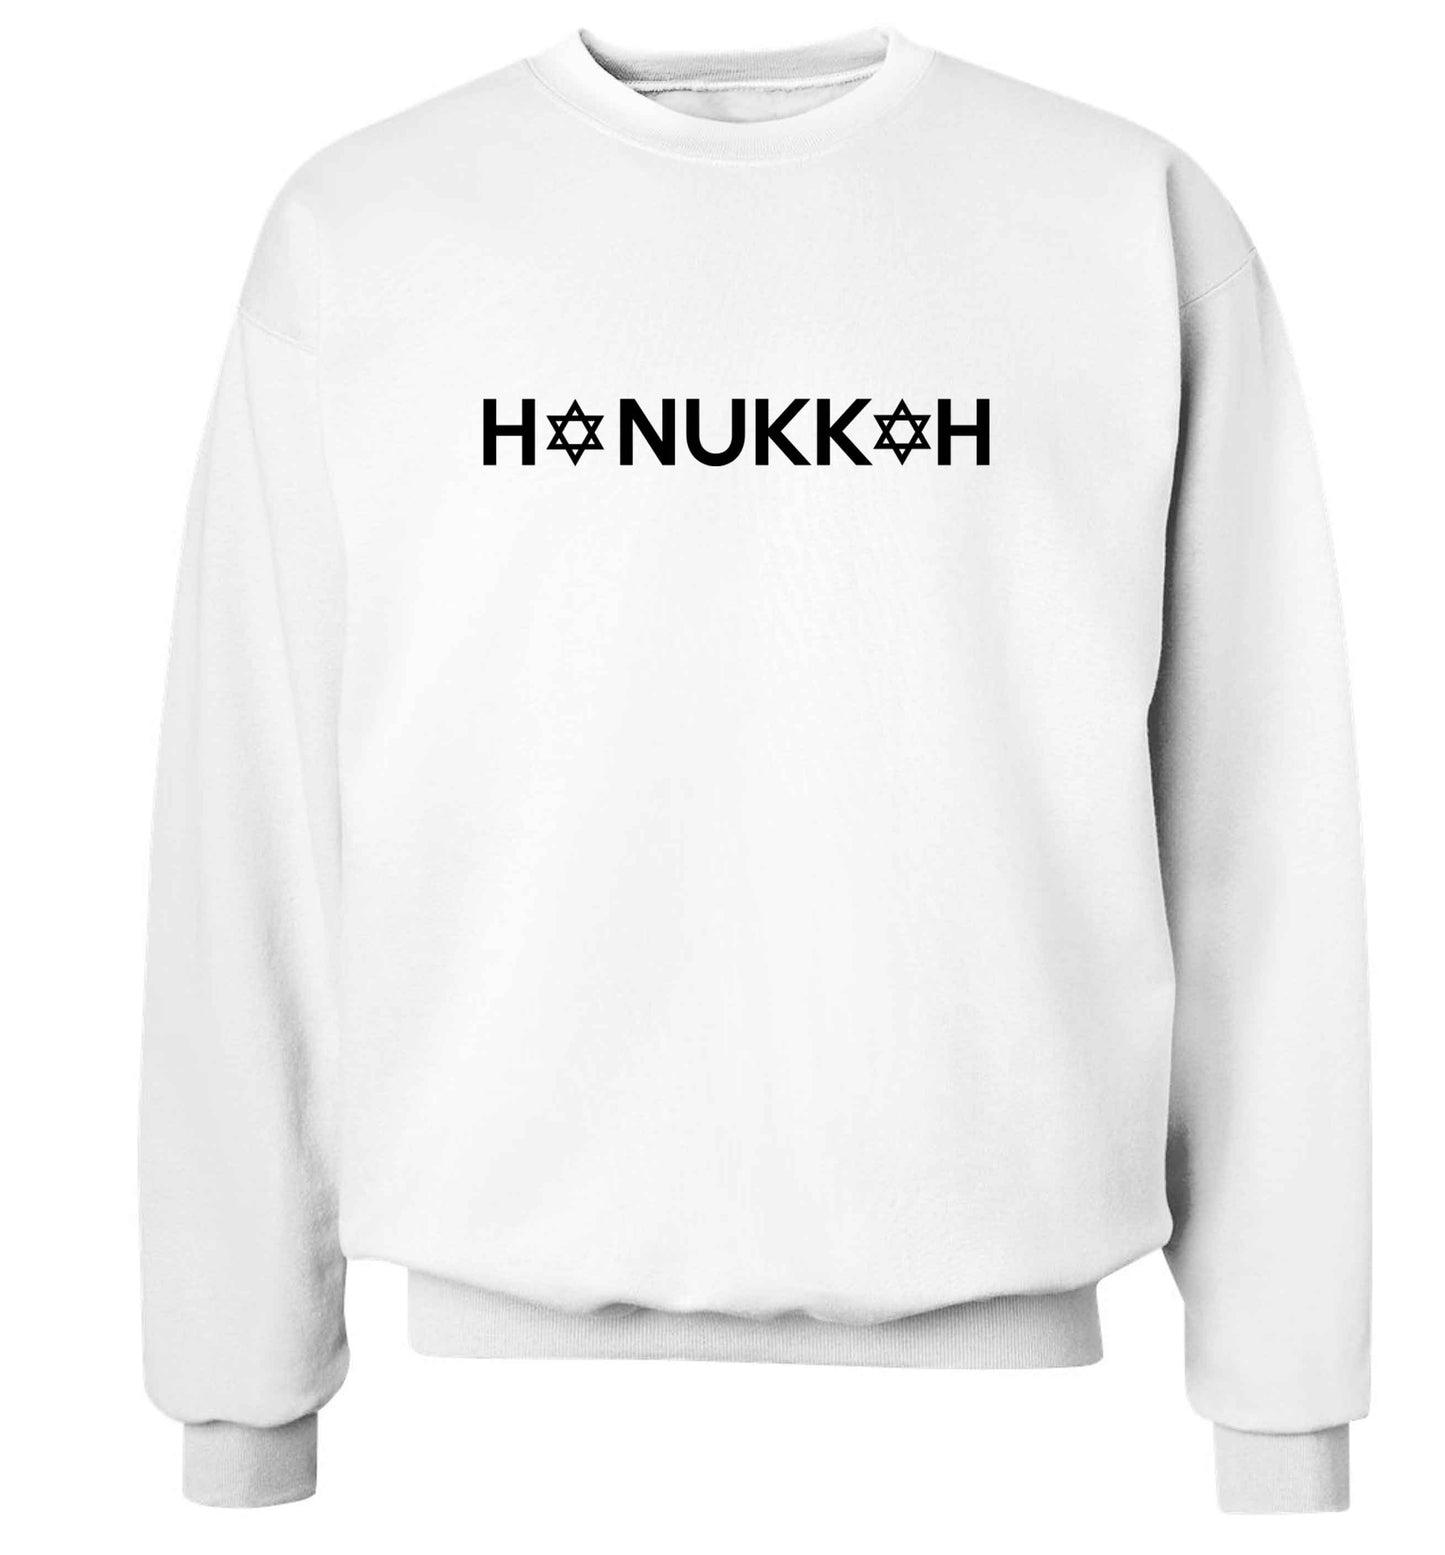 Hanukkah star of david adult's unisex white sweater 2XL